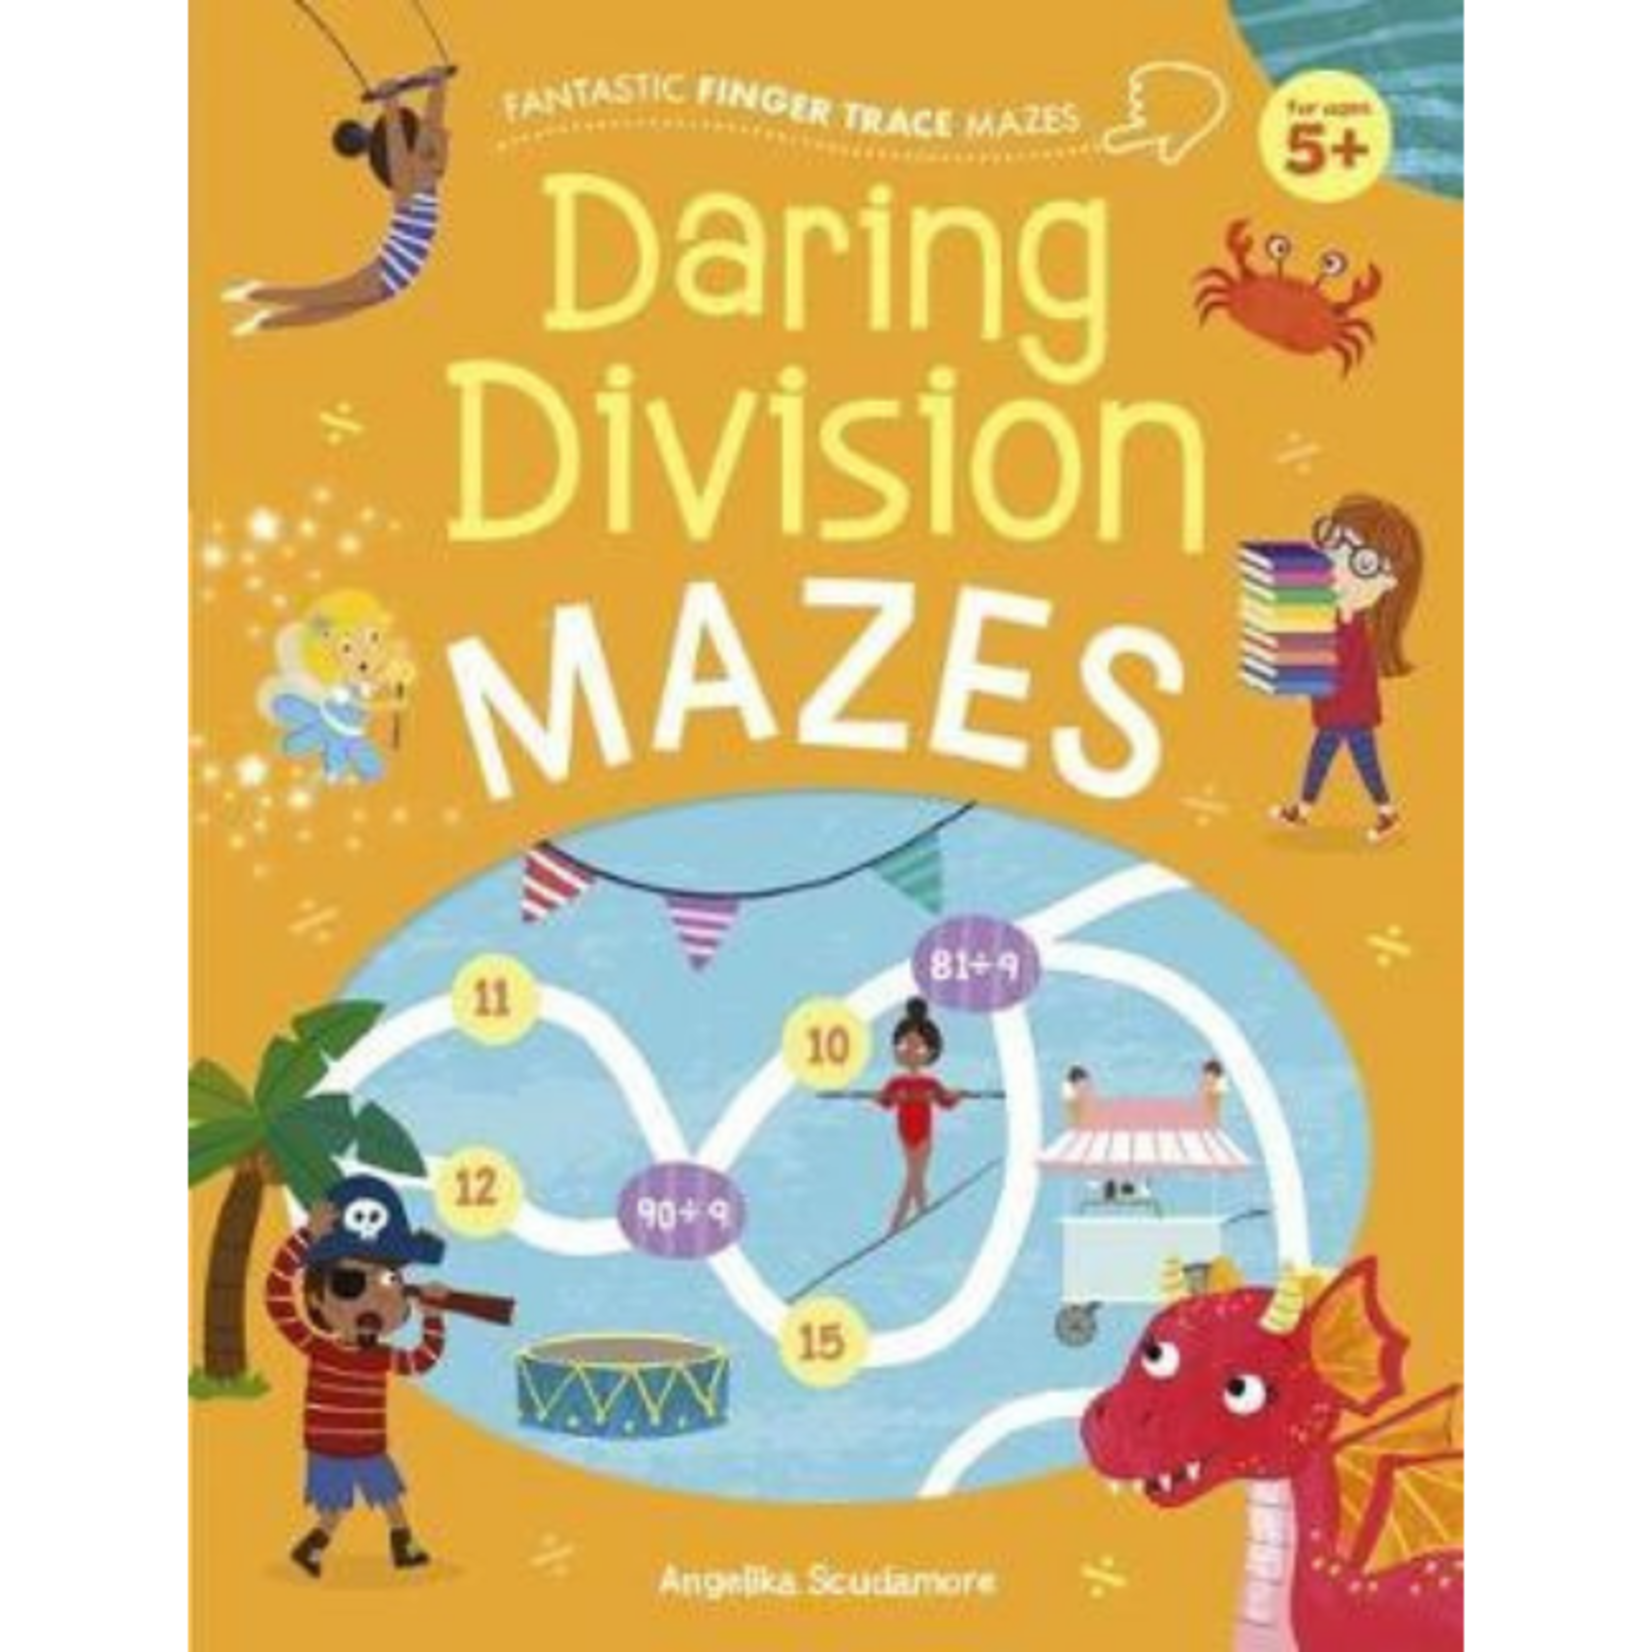 Daring Division Mazes (Fantastic Finger Trace Mazes)